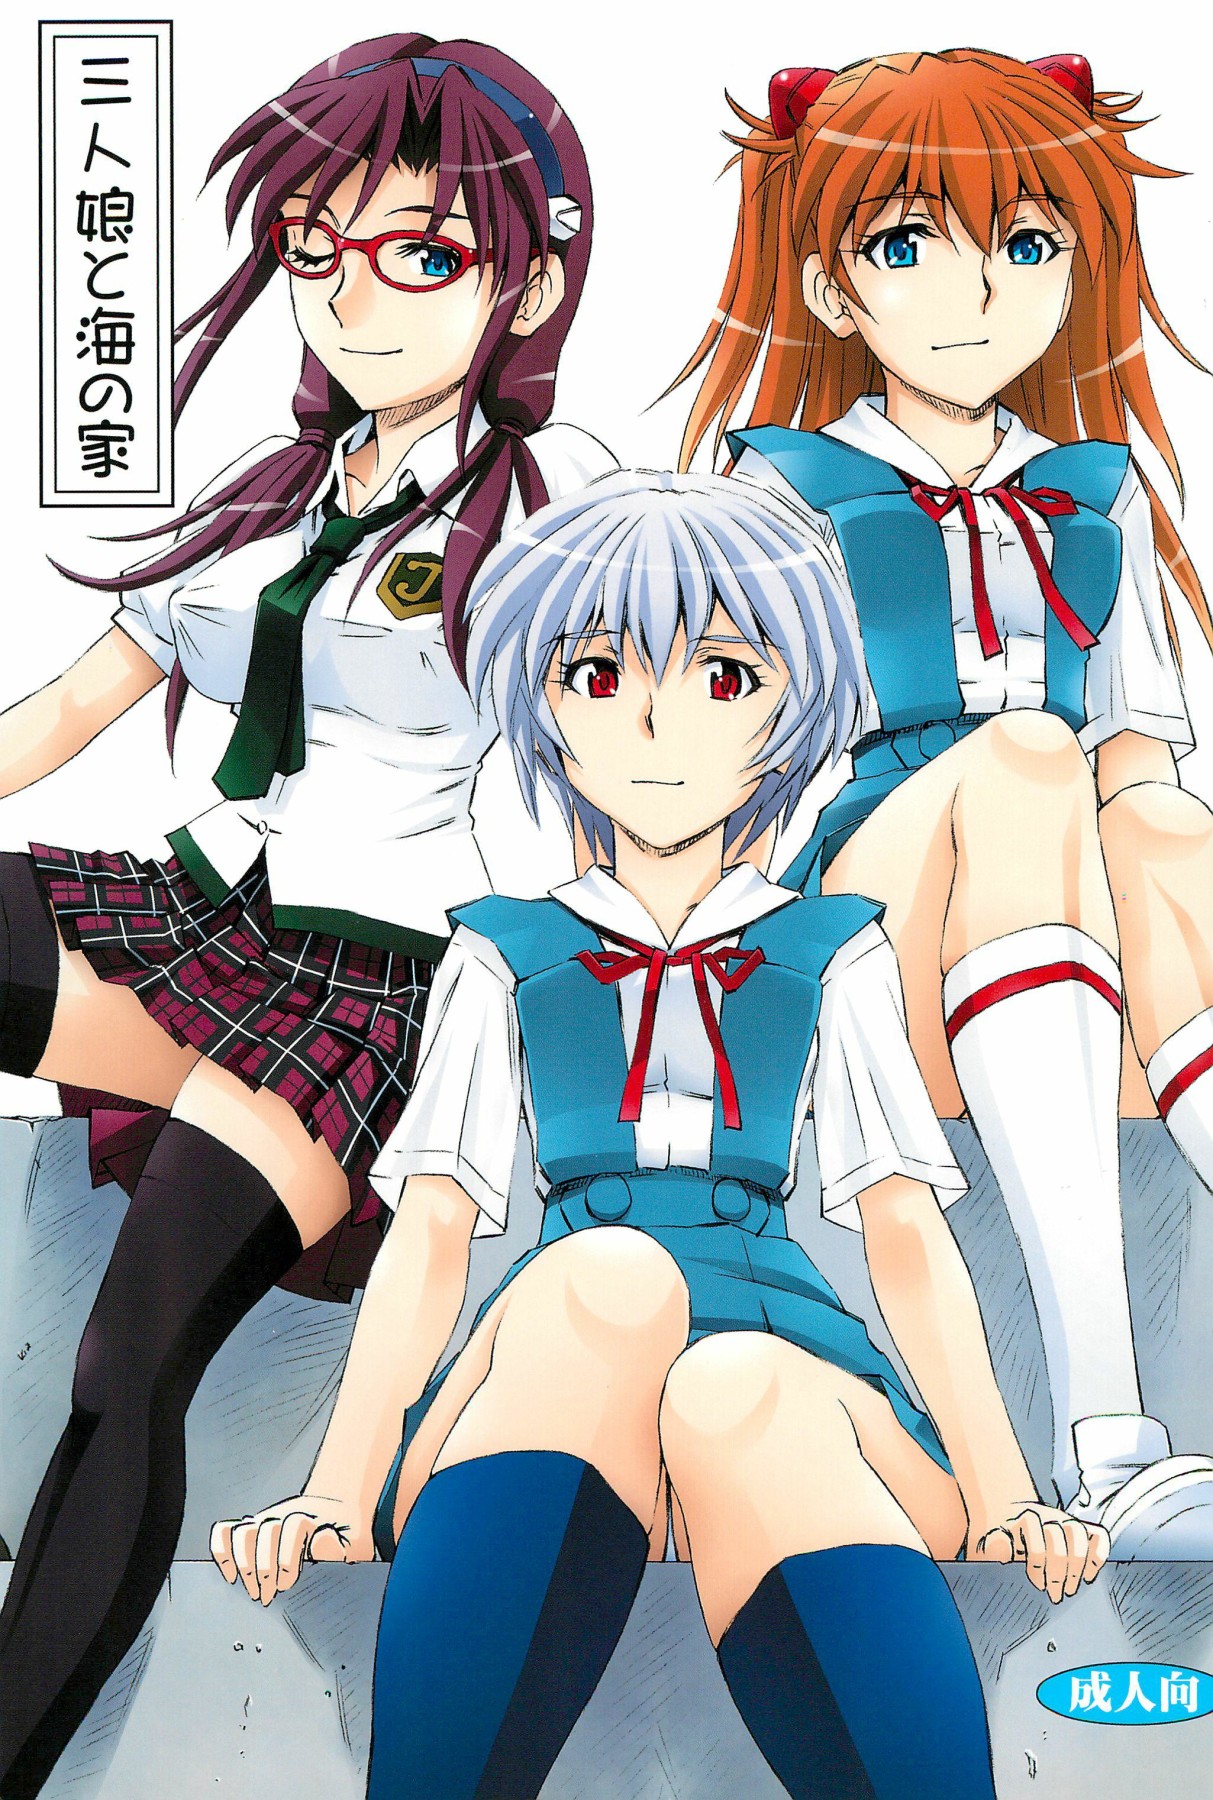 Hentai Manga Comic-v22m-3 Girls And A Beach Hut-Read-1